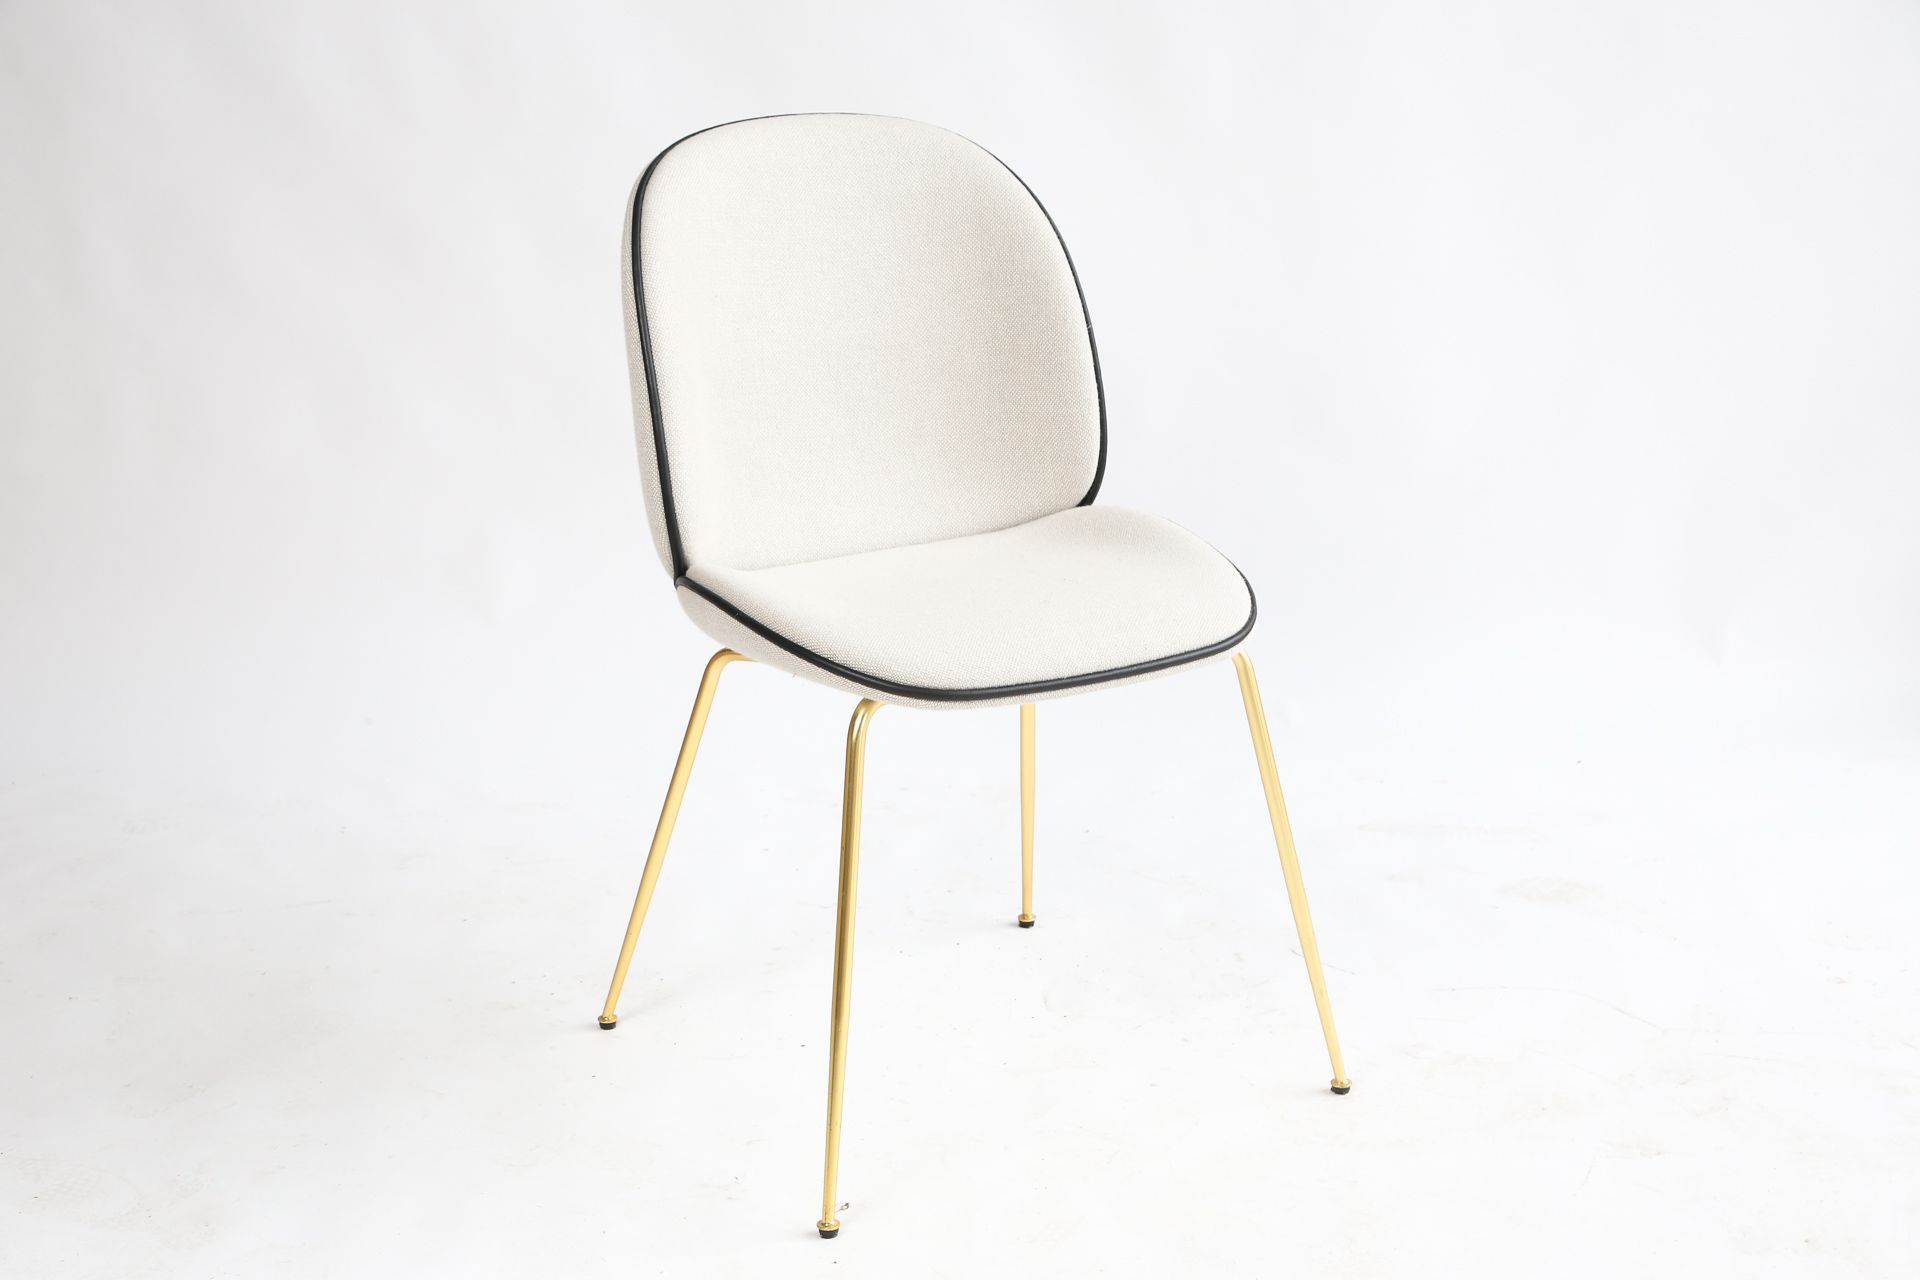 Null GUBI, Beetle Dining Chair - Fully Upholstered, conic base.

Gubi

4 konisch&hellip;